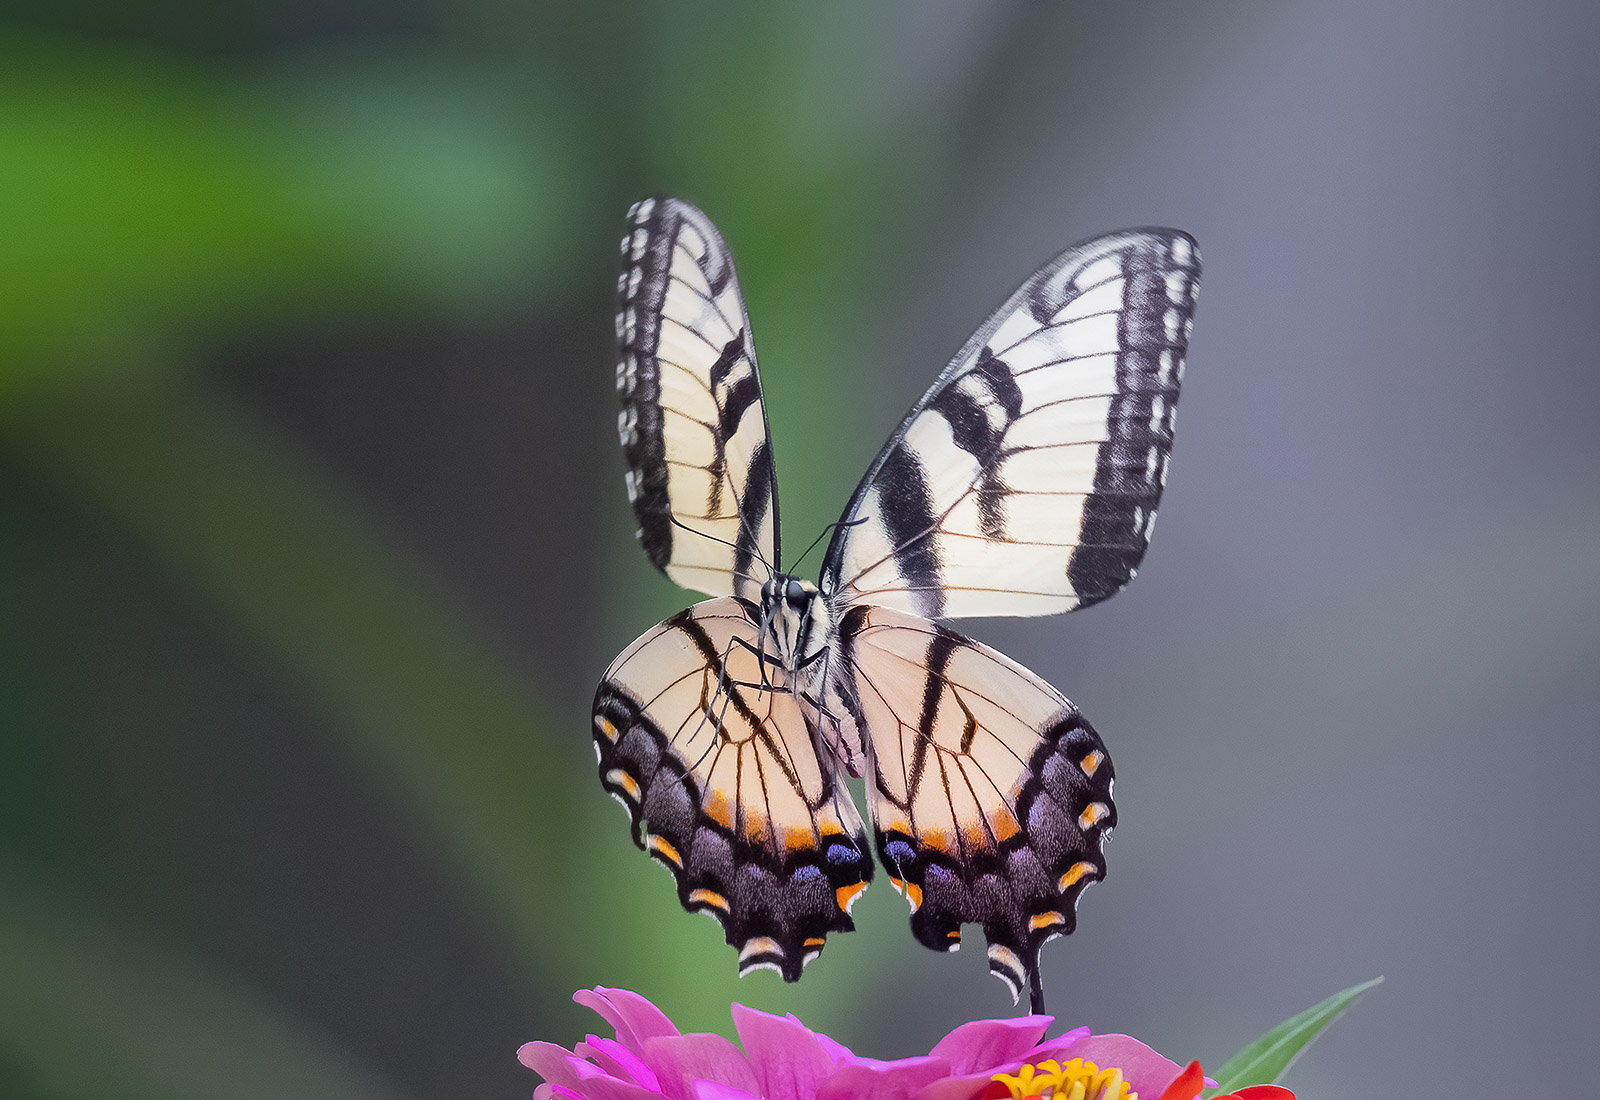 Eastern Tiger Swallowtail, Kane County, IL